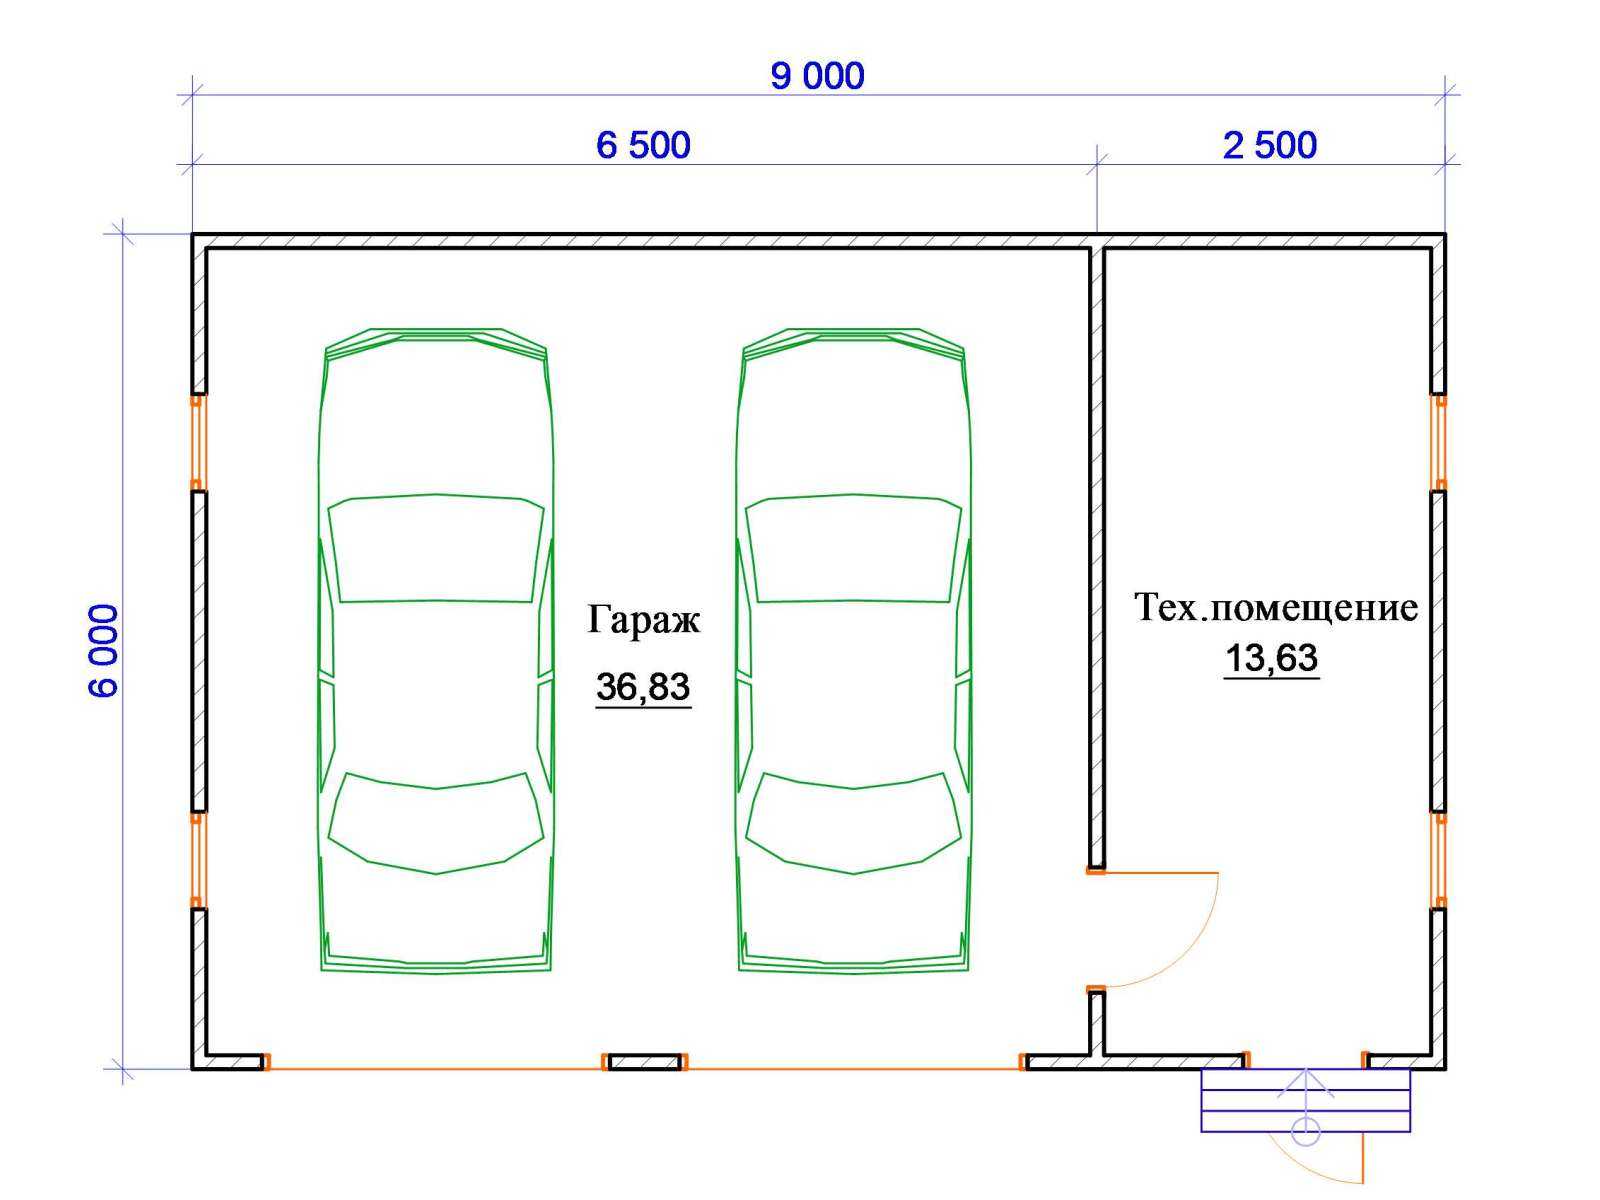 Проект гаража на две машины: фото с ценами и планировки с размерами